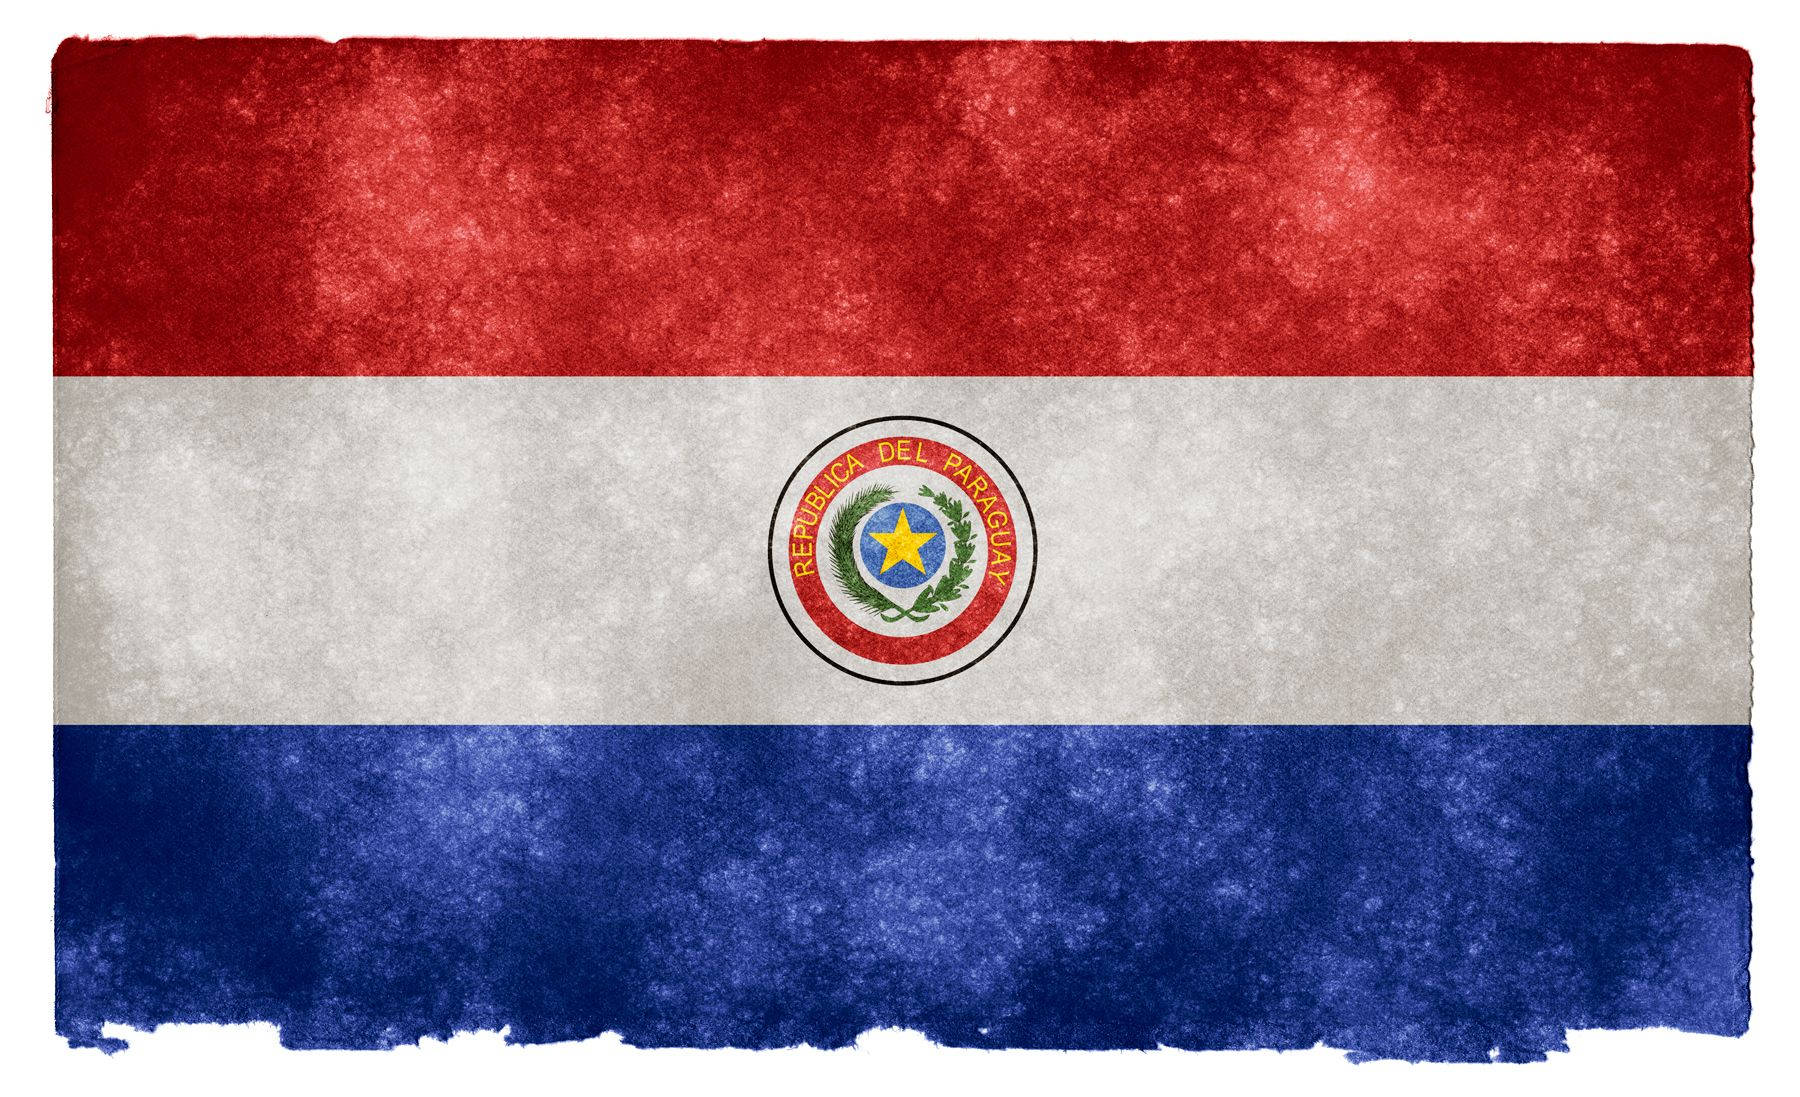 Proud Display of Paraguay's Flag Wallpaper